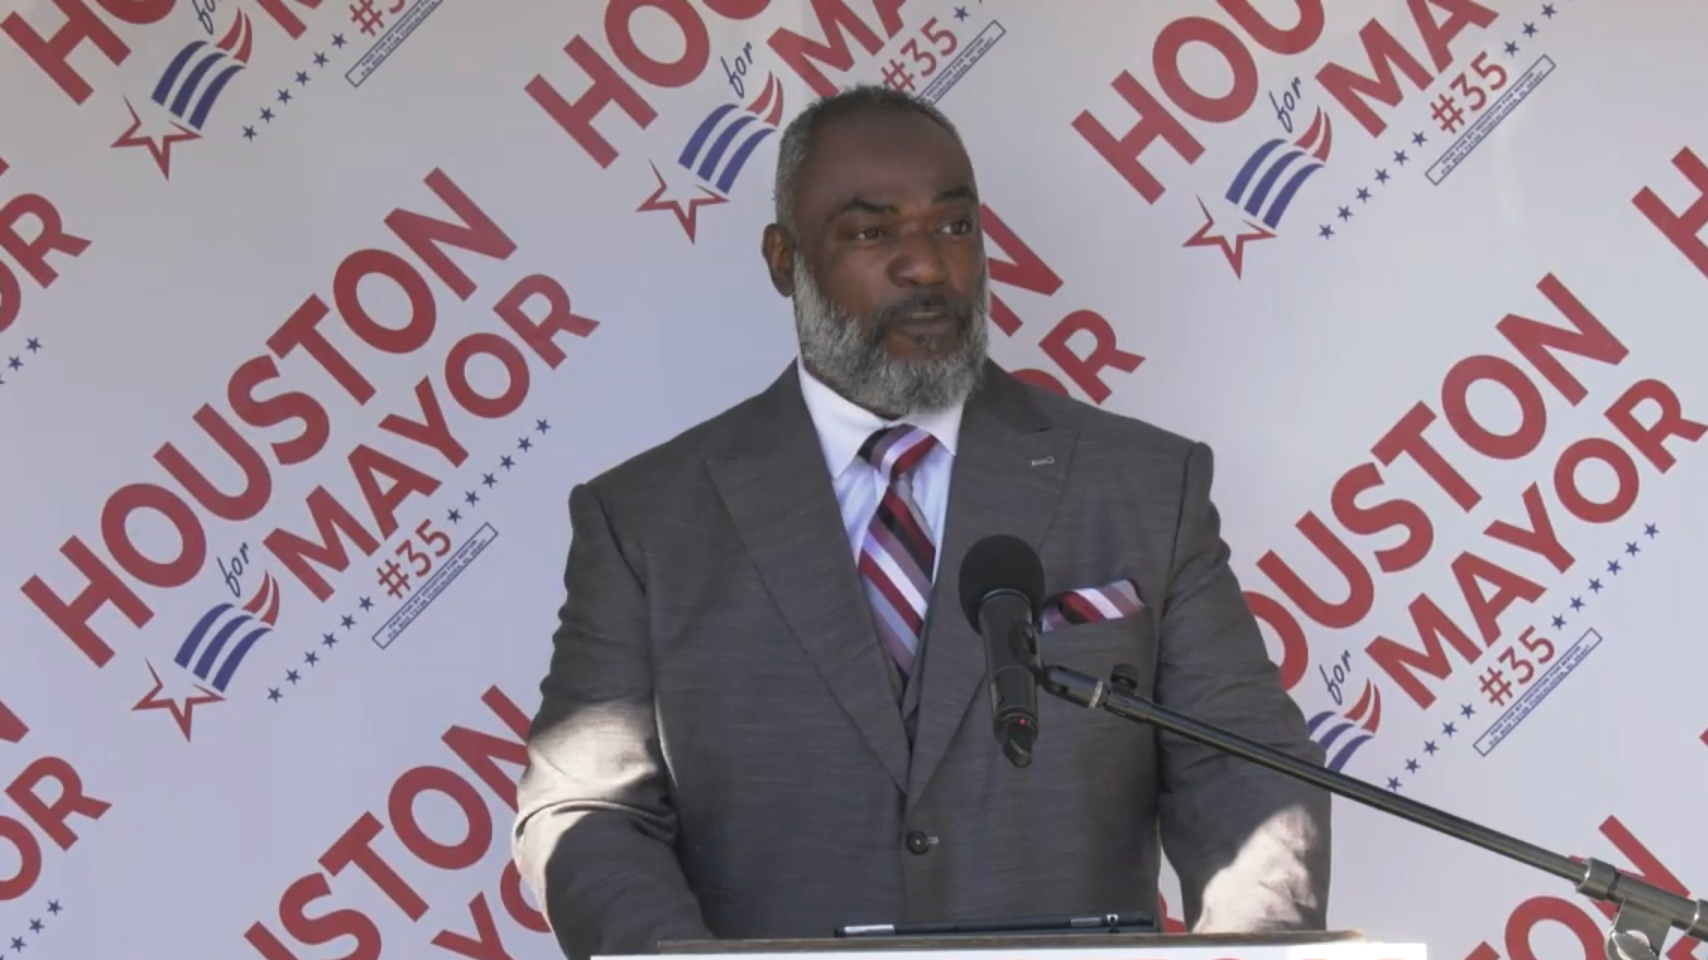 Martin Houston is running for mayor of Tuscaloosa Around World journal